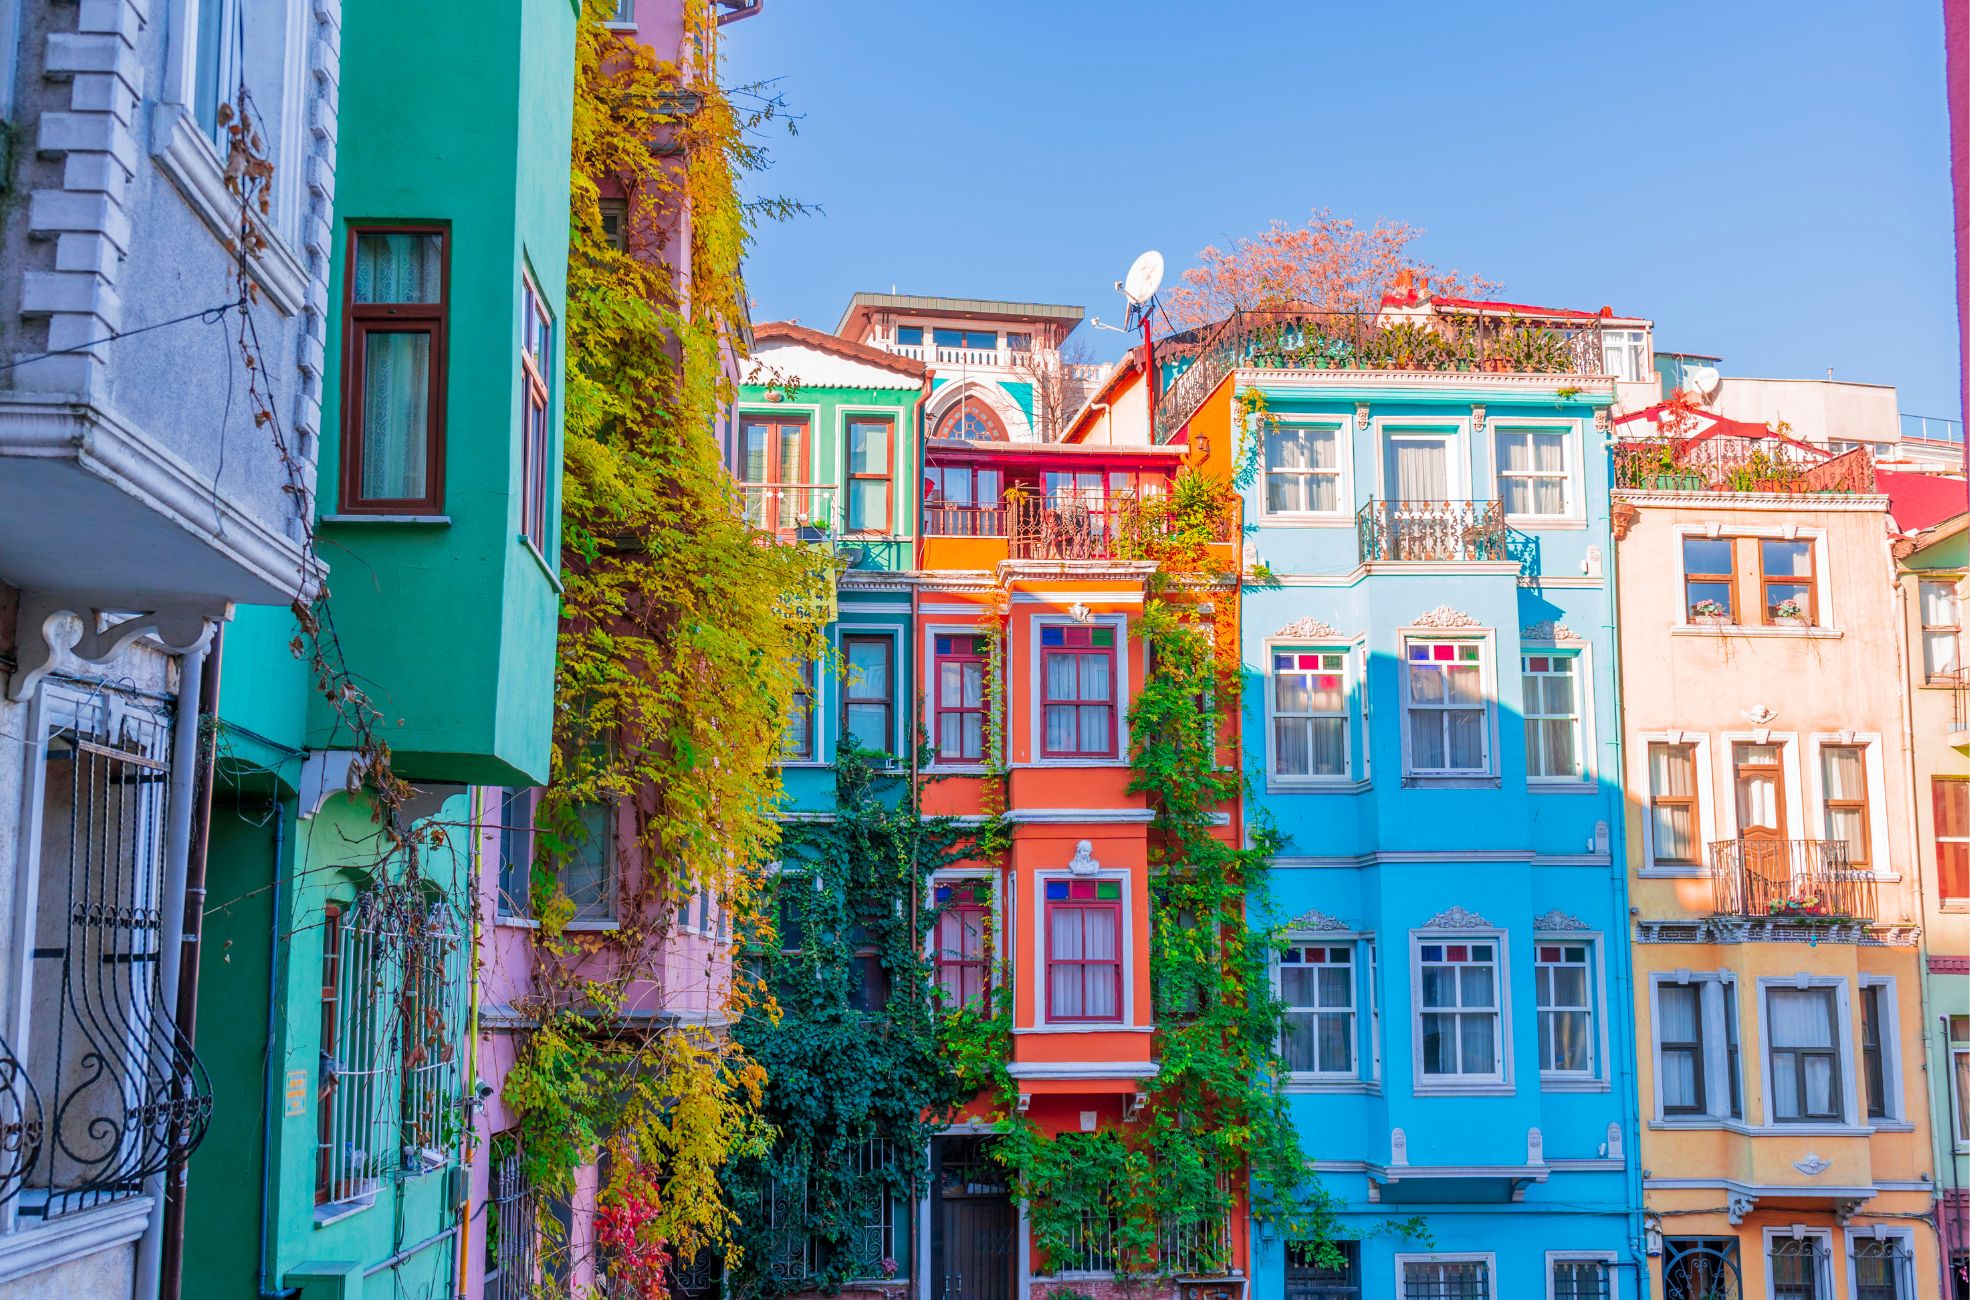 The Colour Property Landscape Of Turkey